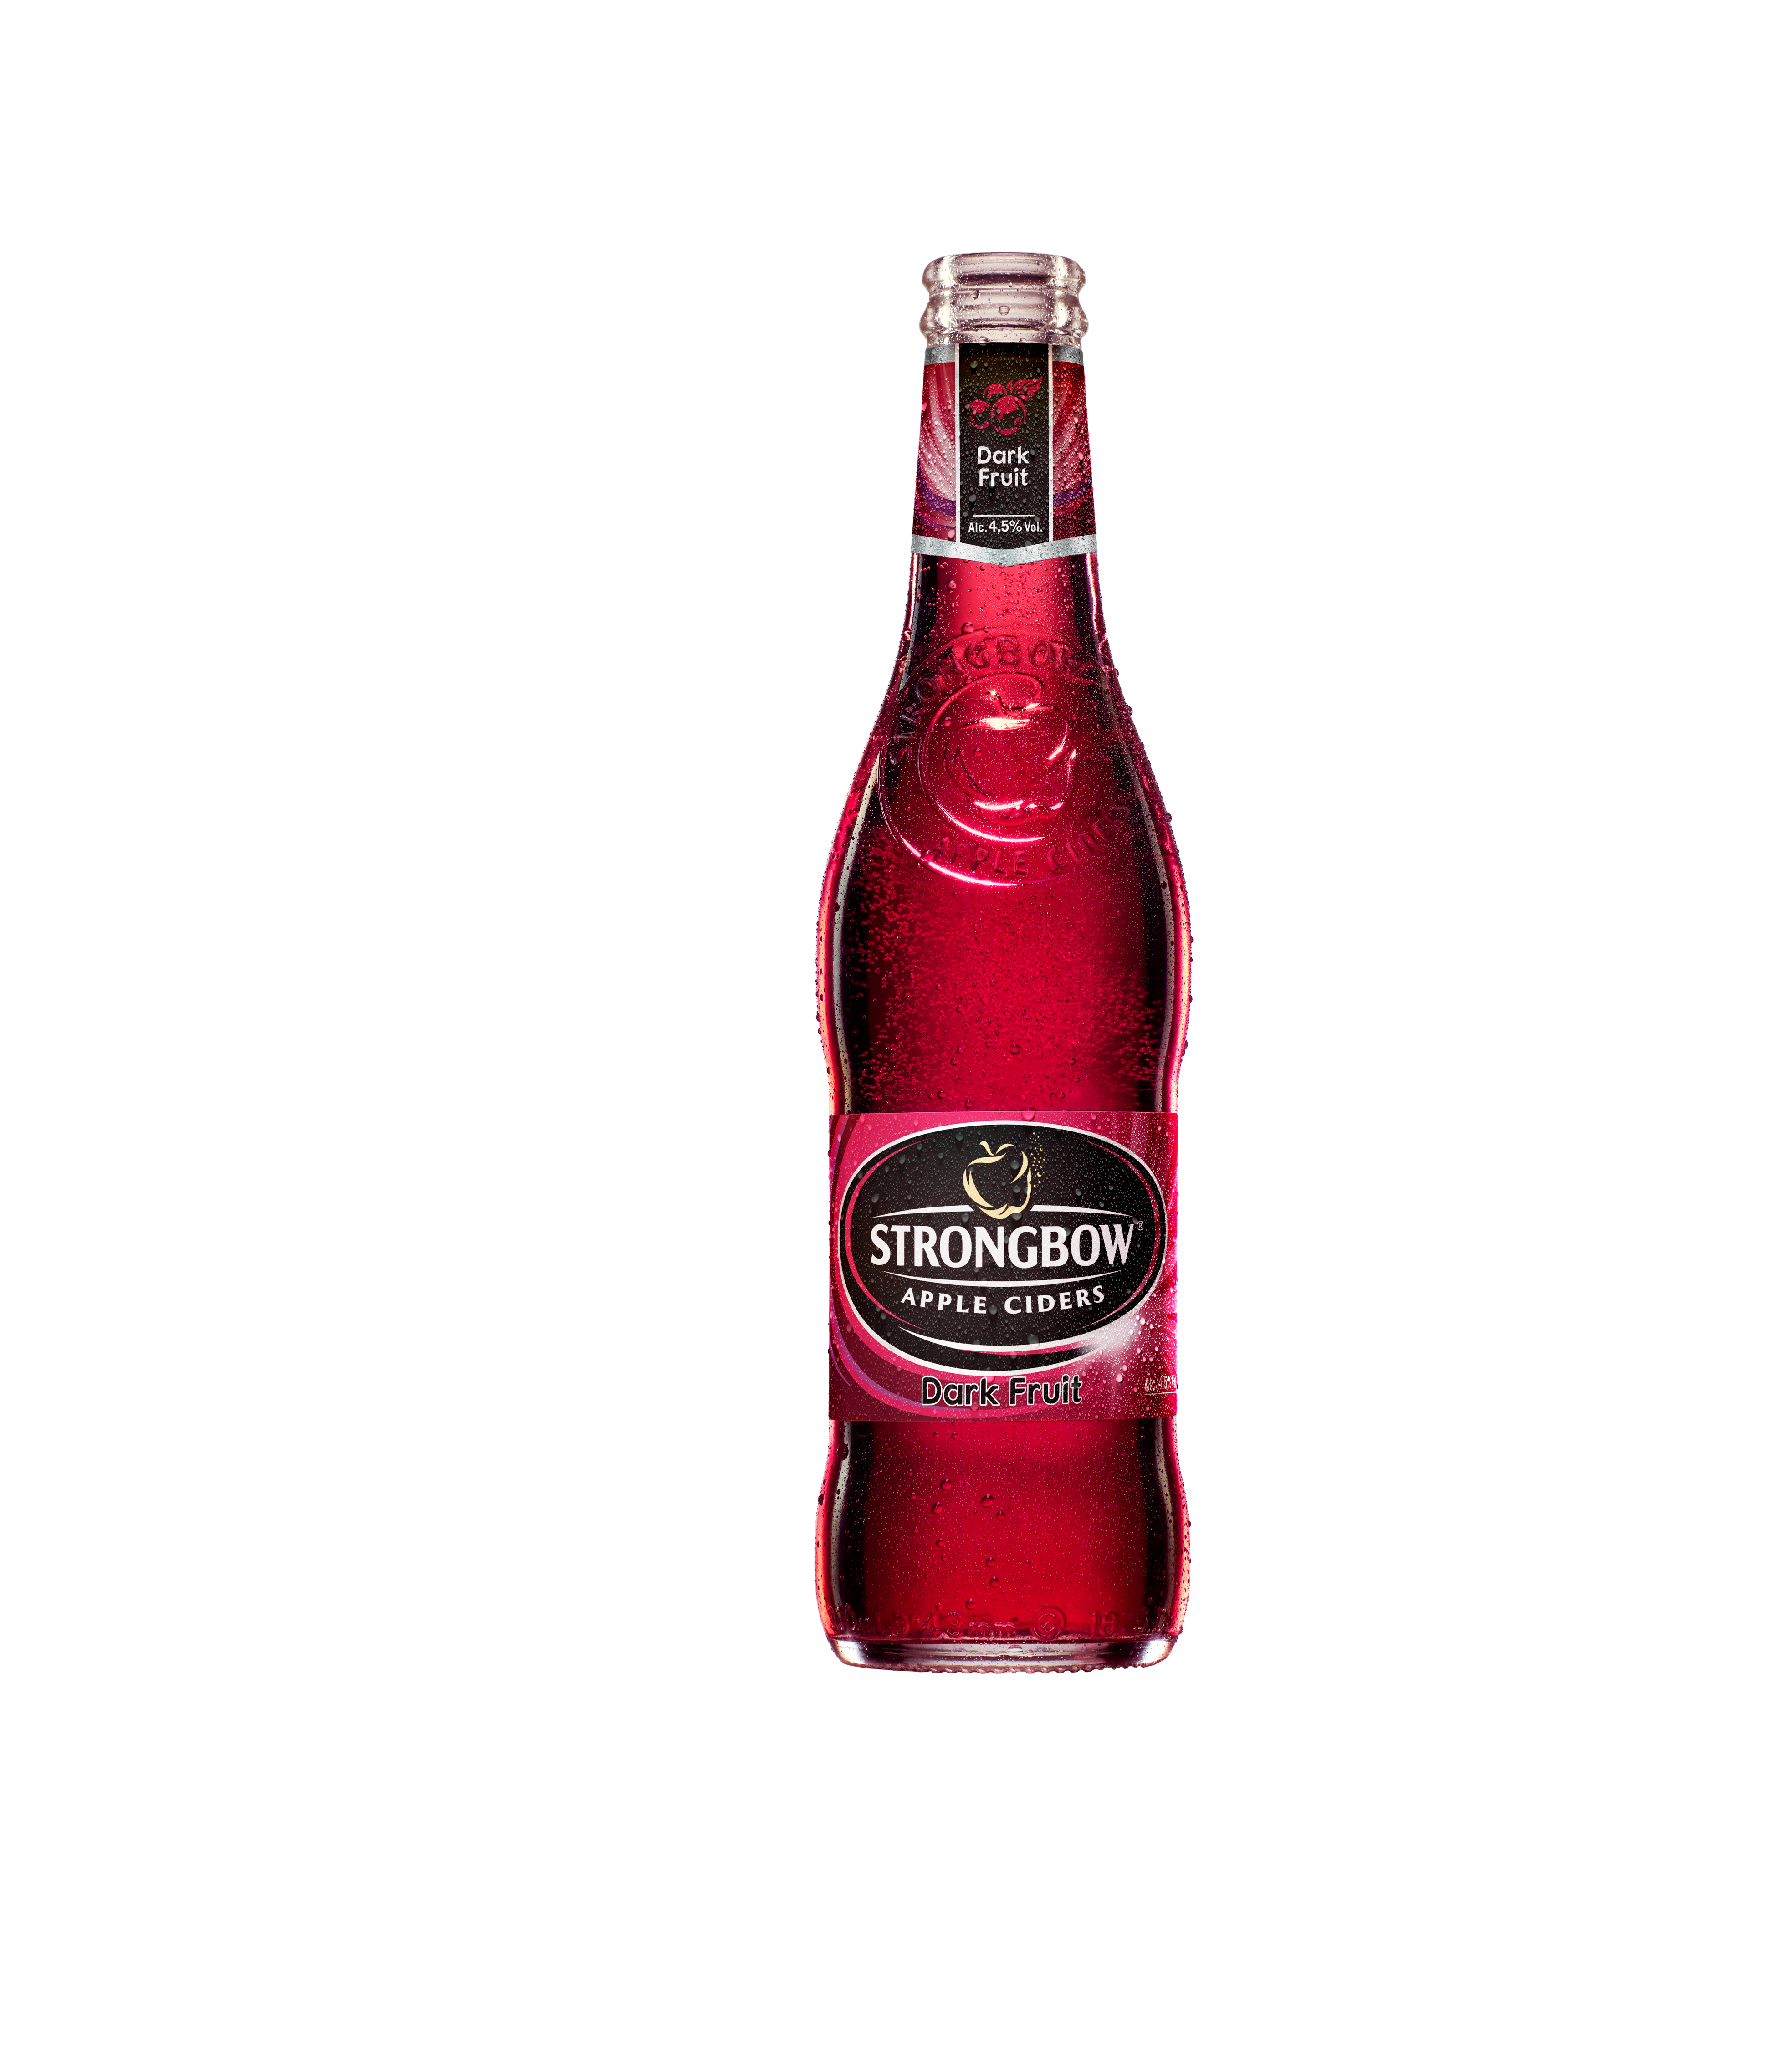 Strongbow Dark Fruit Bottle (Old Label) Hero Product Image 3914X4549px